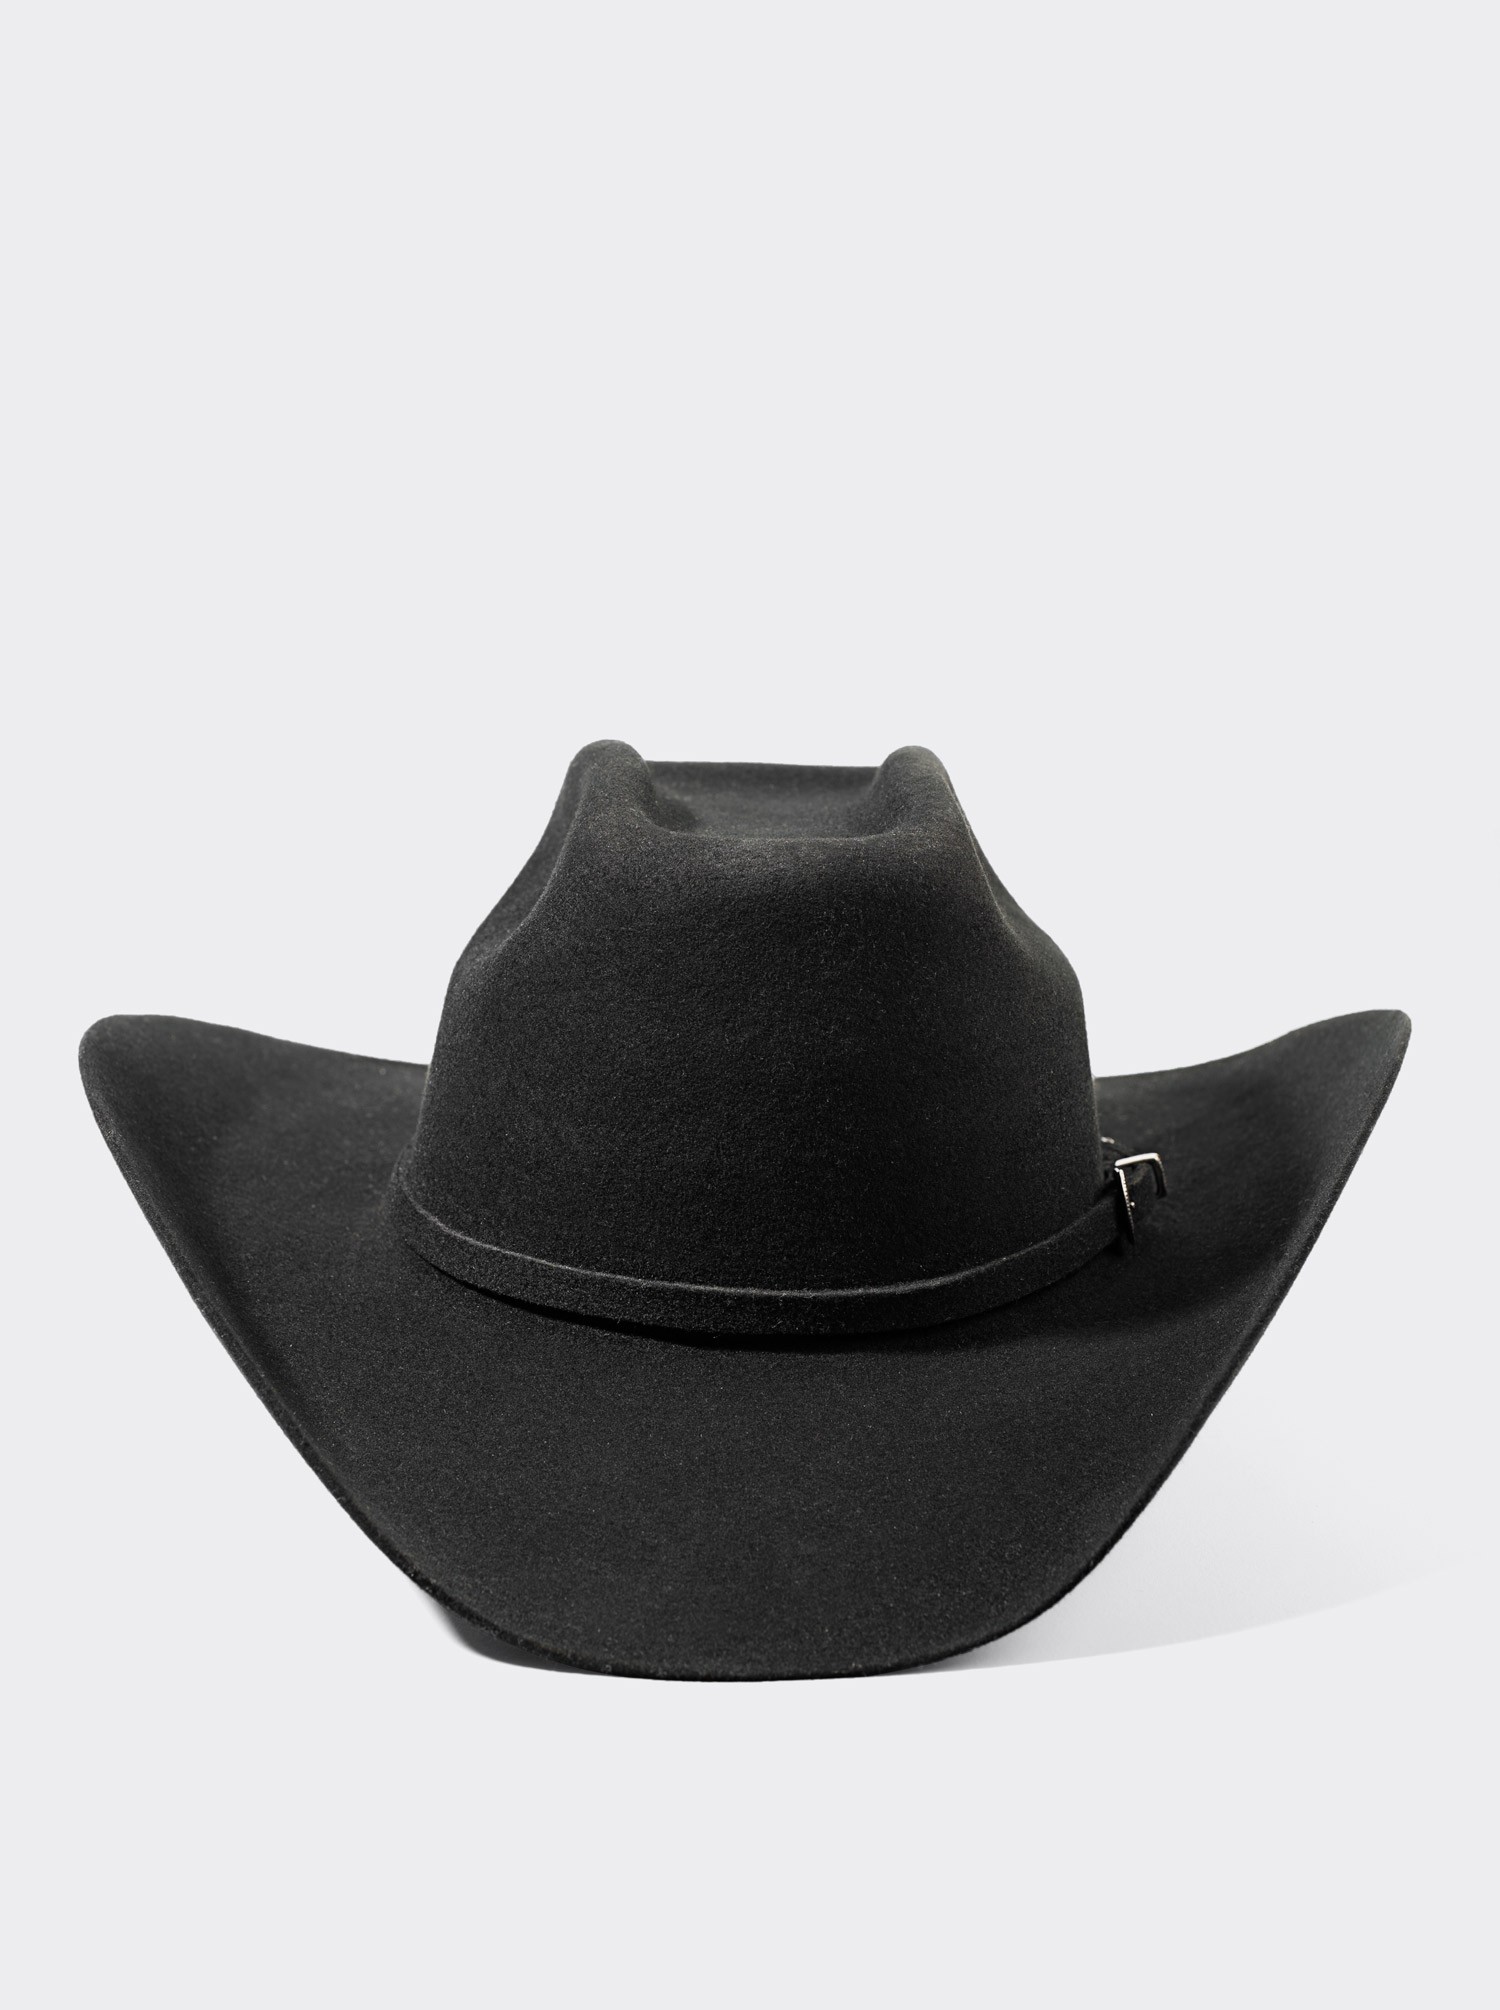 Sombrero Unisex Vaquero de Lana color Negro Siete Leguas Est. Texana